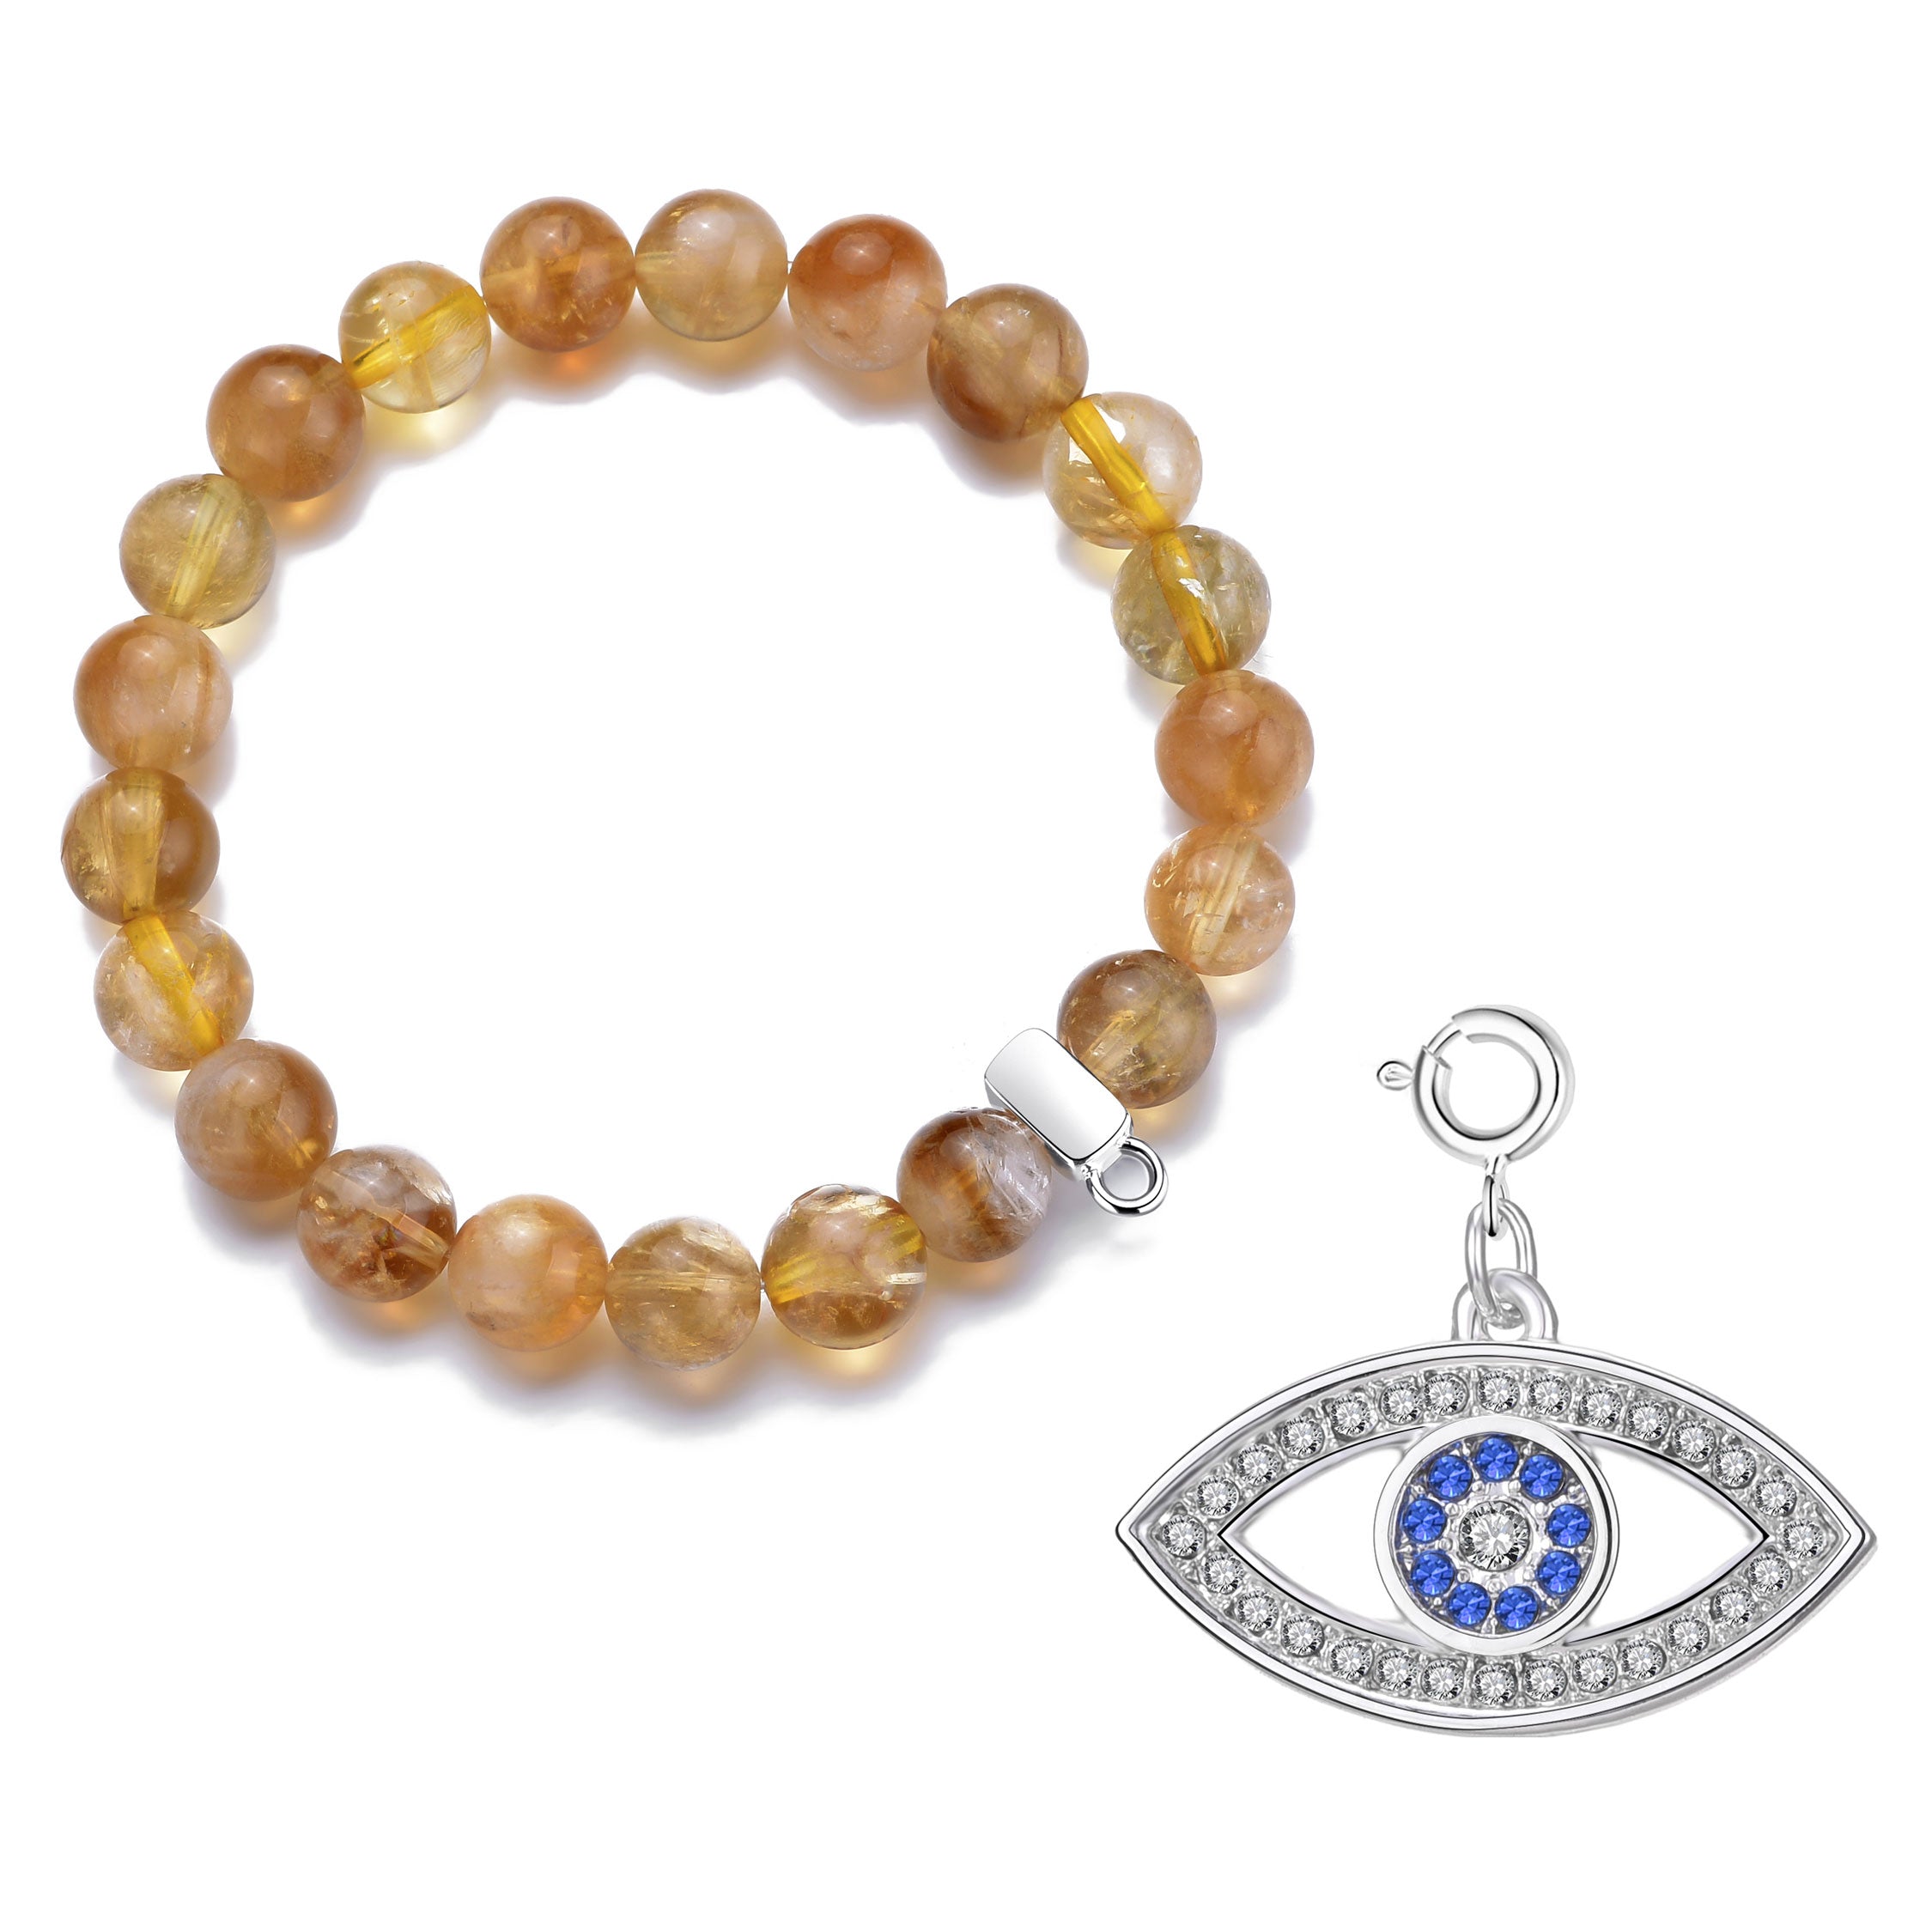 Yellow Quartz Gemstone Bracelet with Charm Created with Zircondia® Crystals